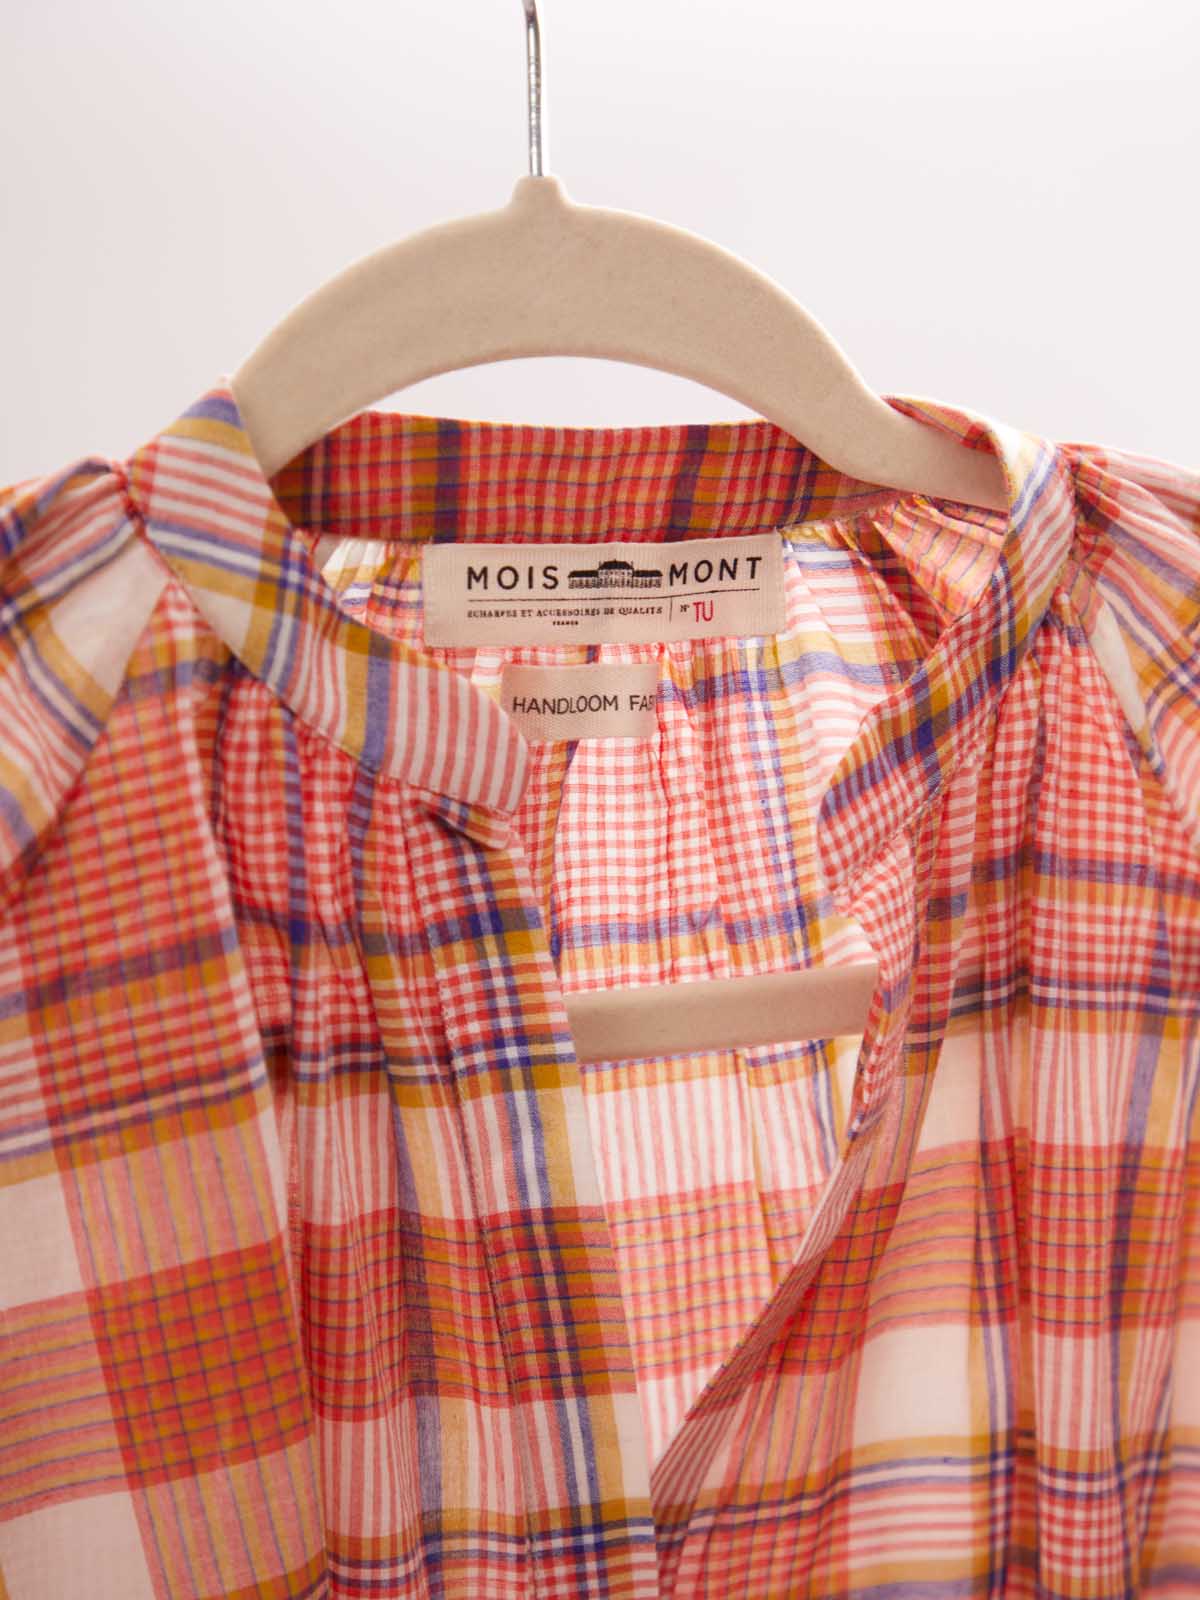 Moismont plaid shirt detail